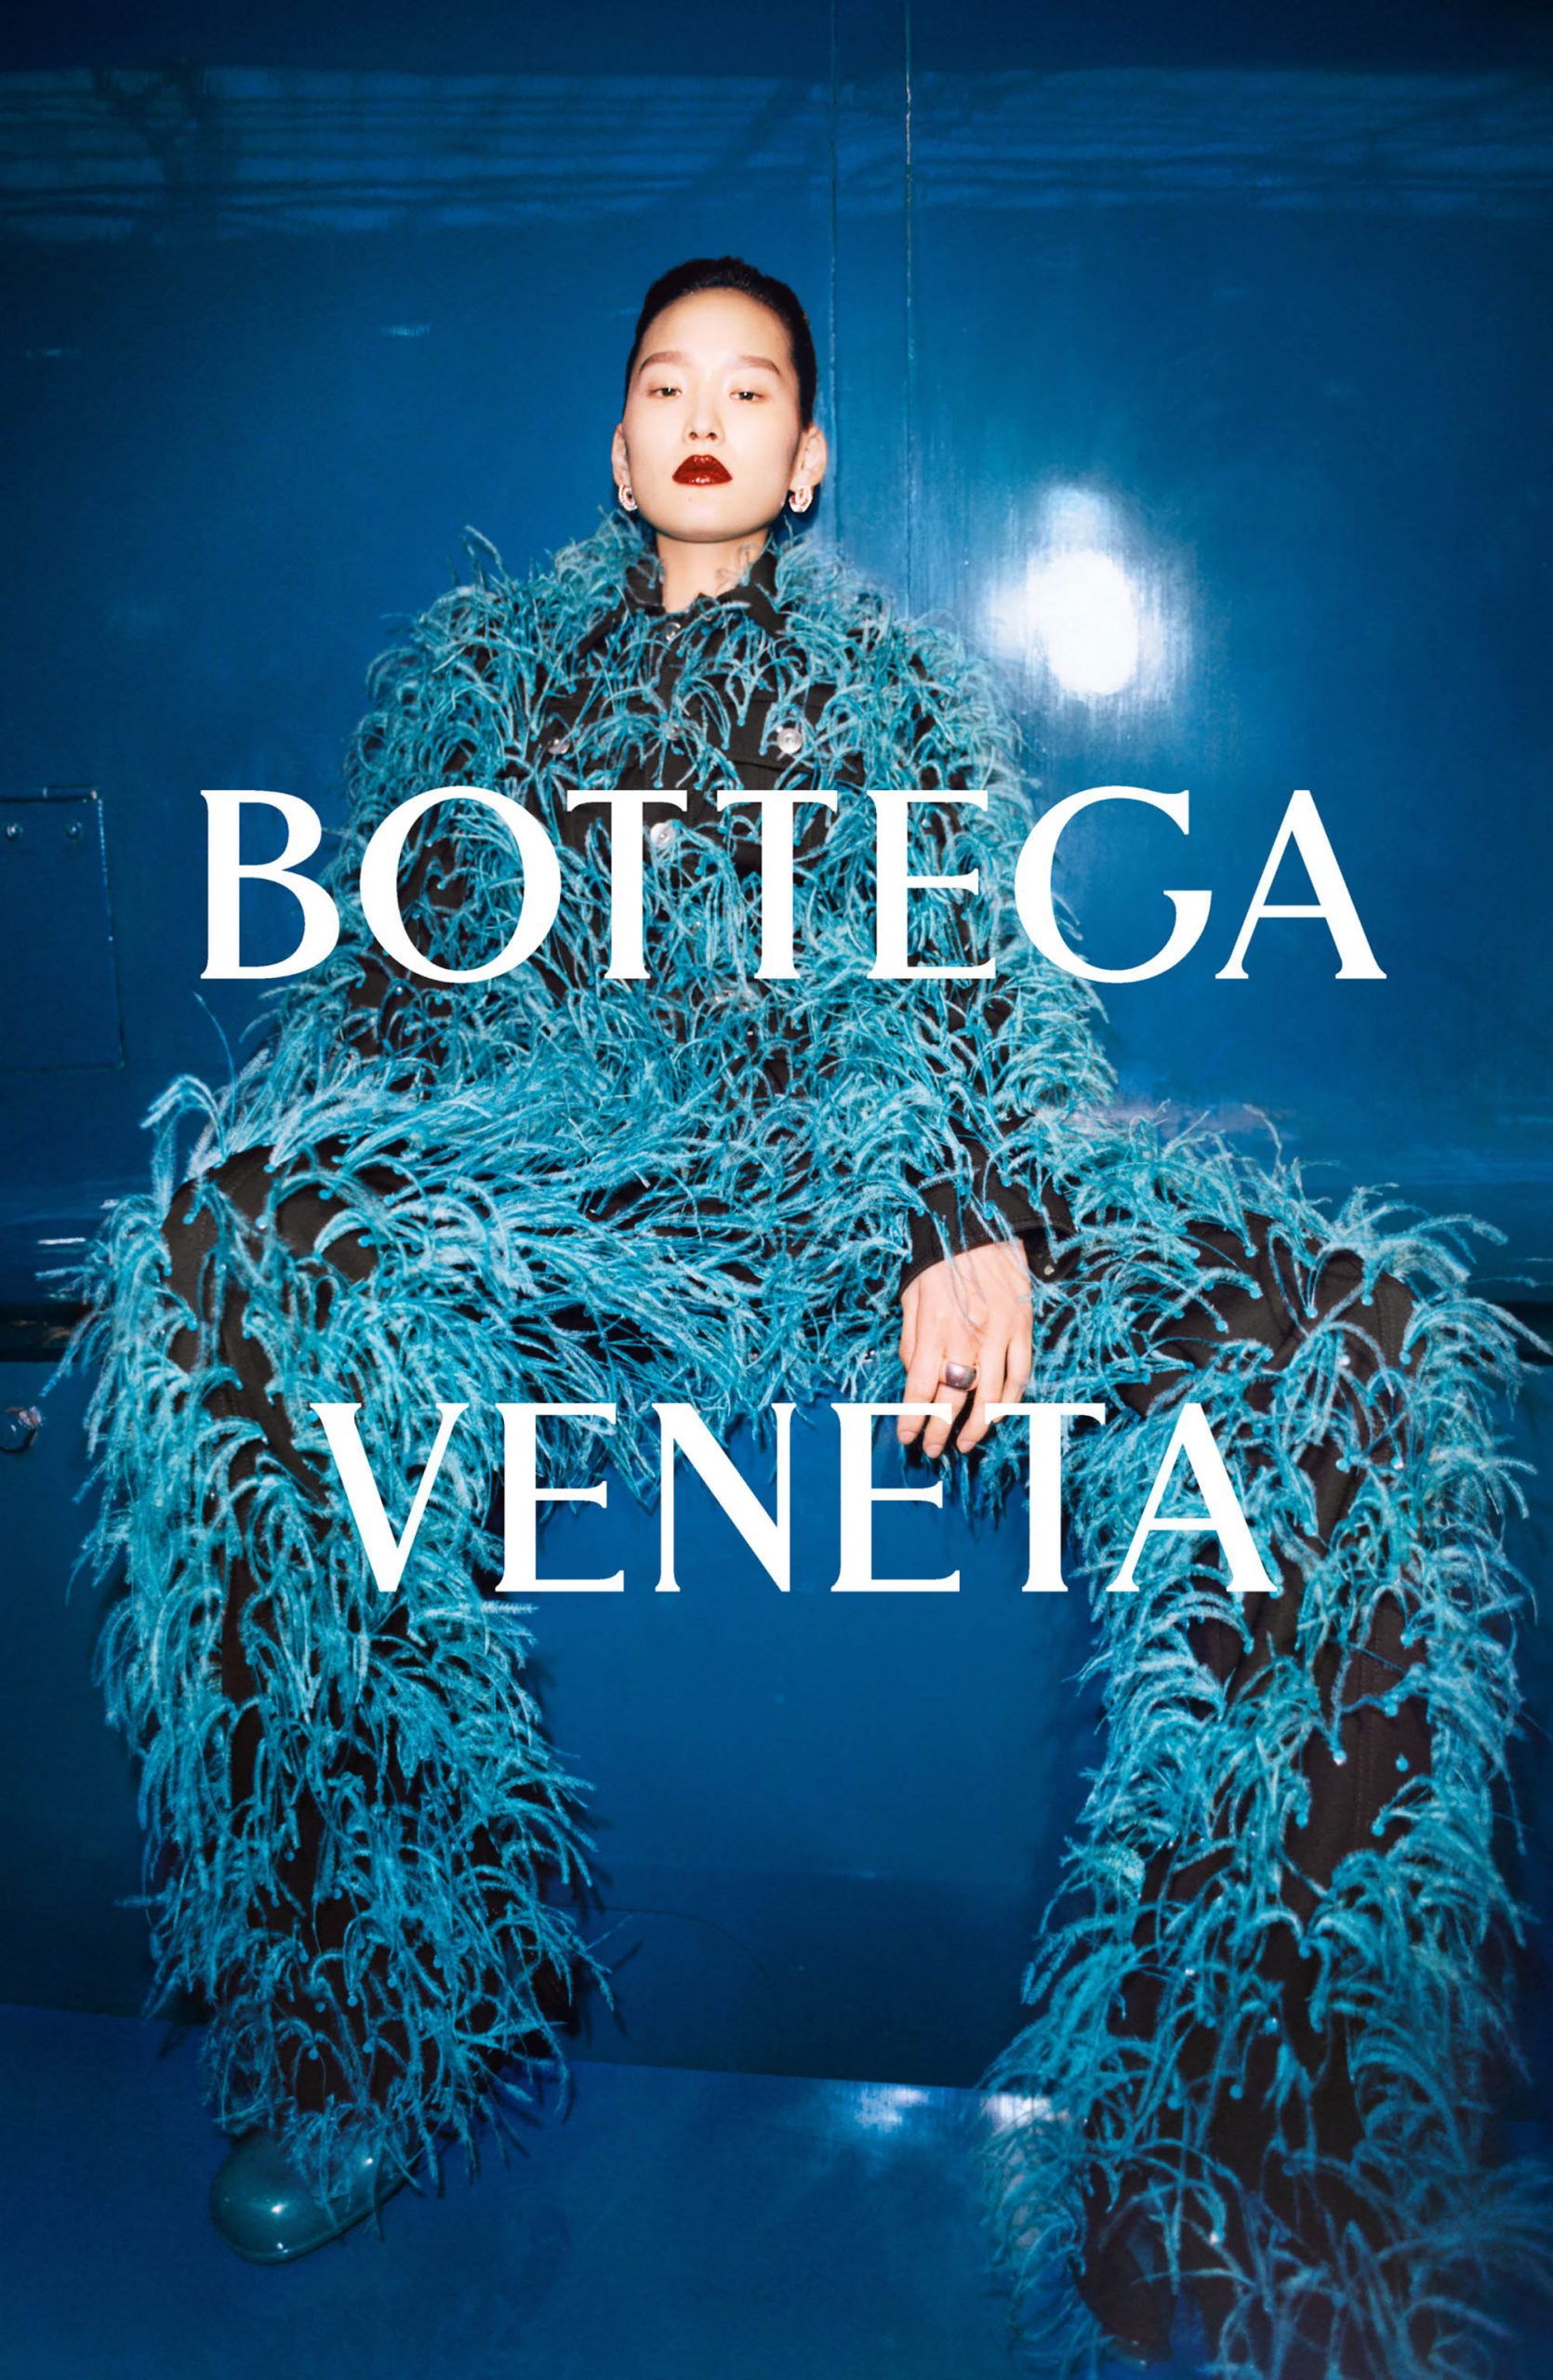 thời trang của bottega veneta